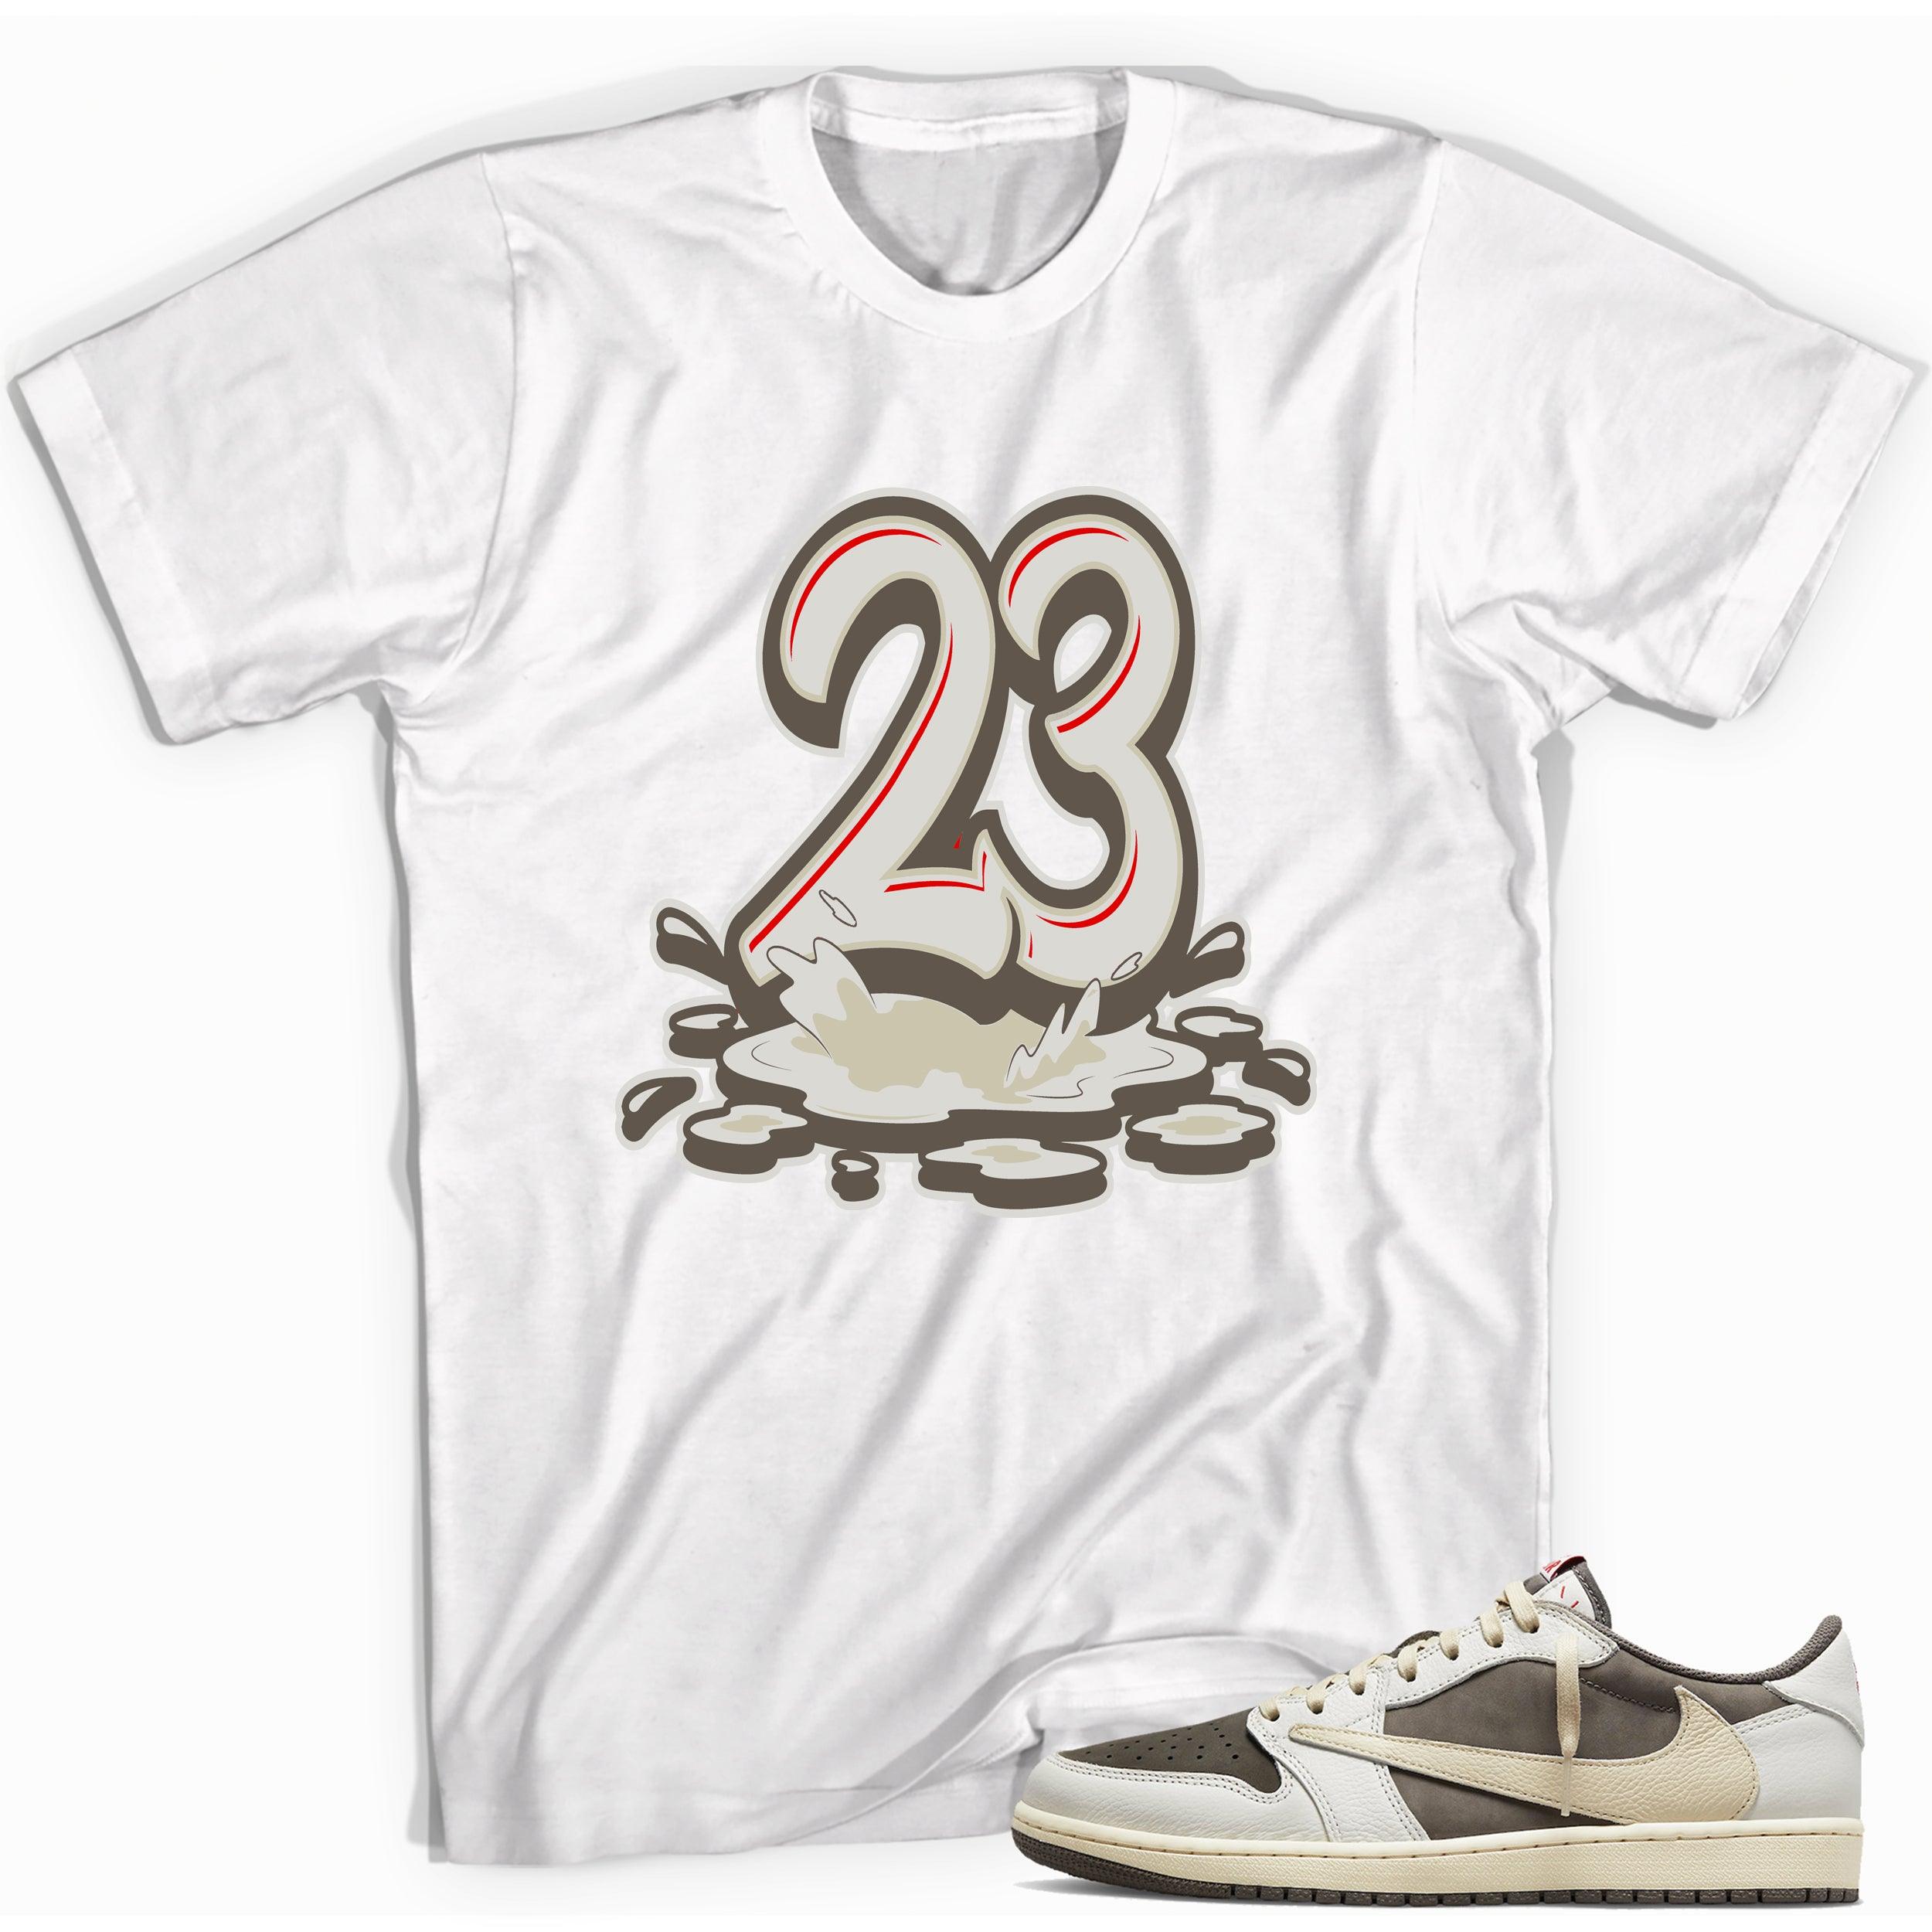 Number 23 Melting Shirt Travis Scott Air Jordan 1 Low Reverse Mocha photo